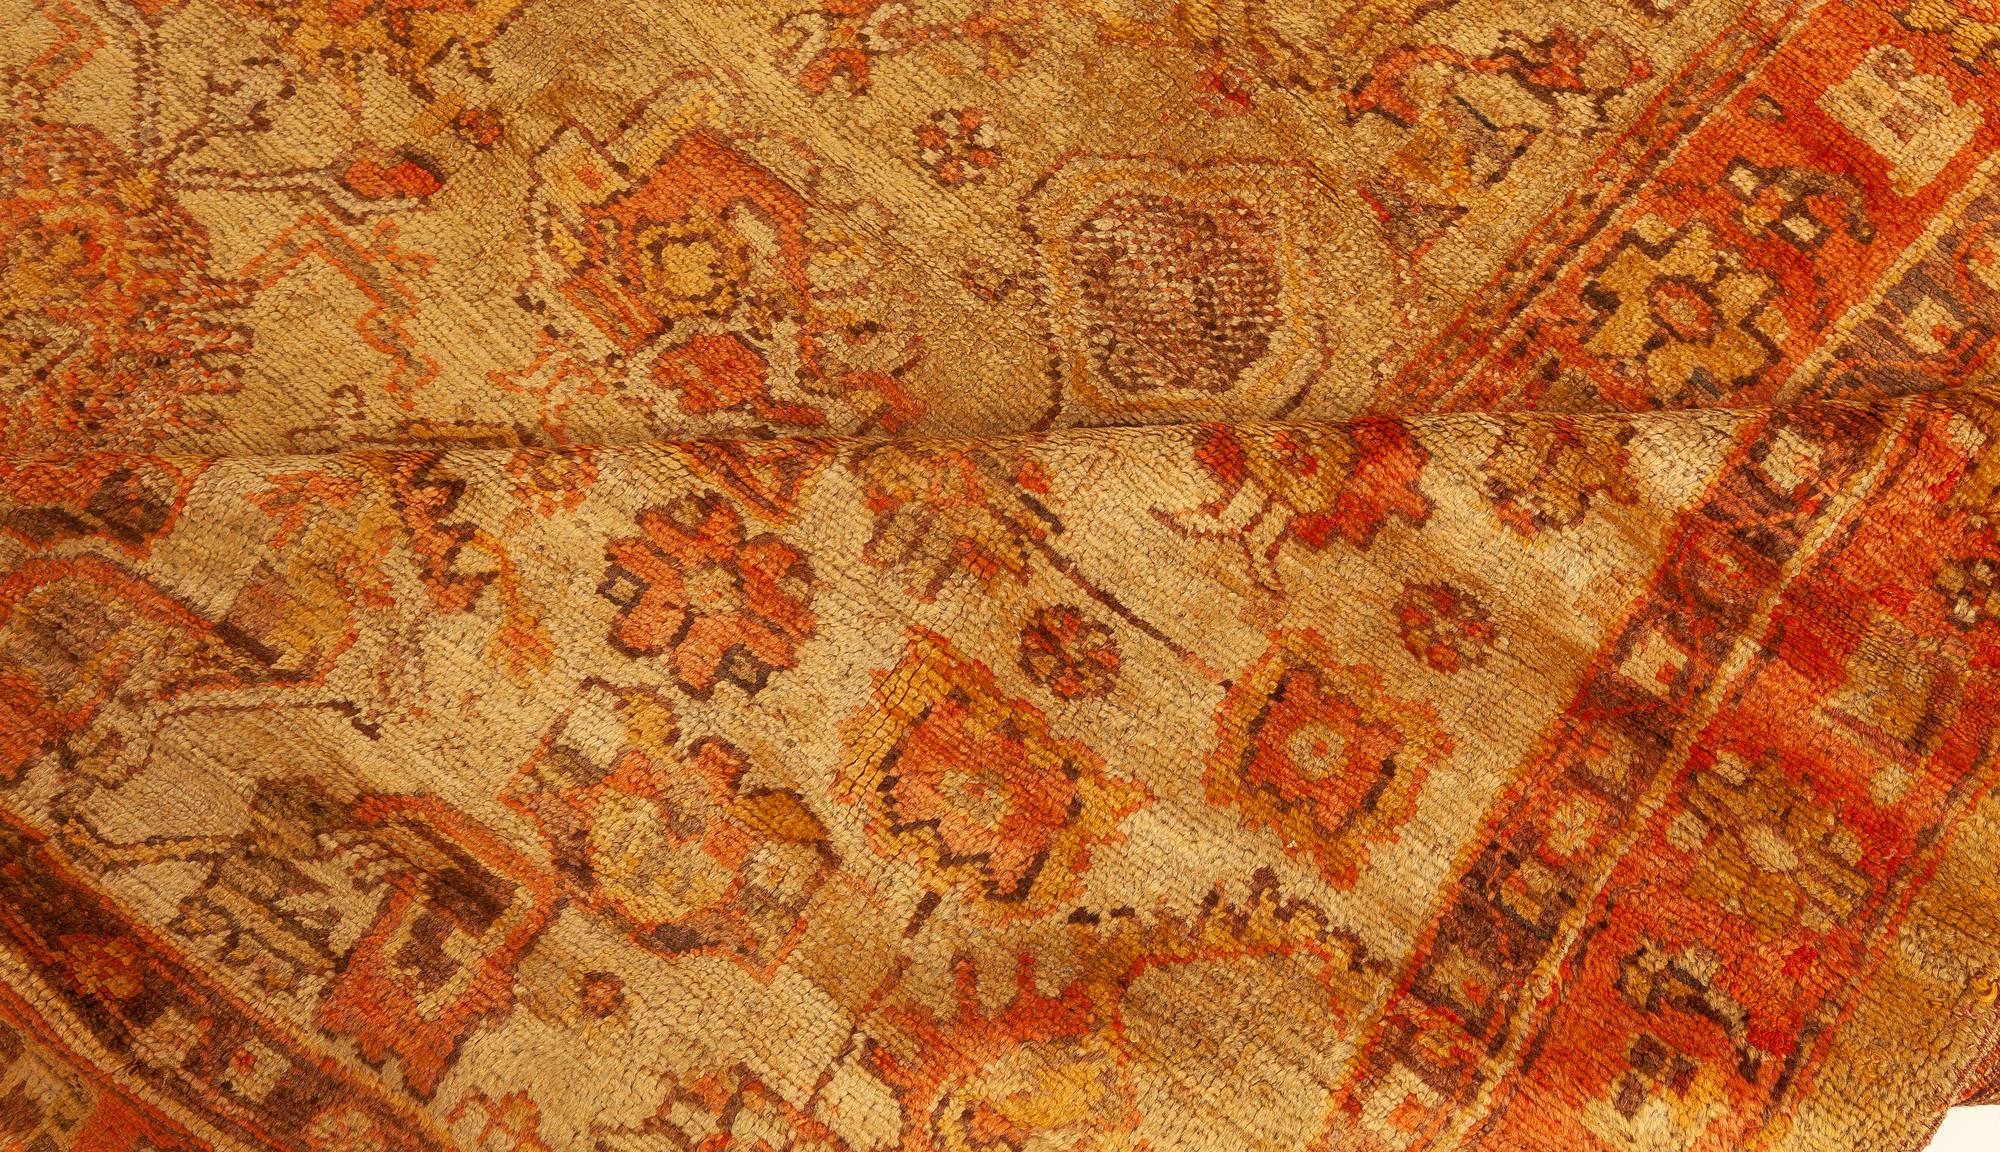 Fine antique Turkish Oushak beige, gold, green, orange rug (size Adjusted)
Size: 18'3